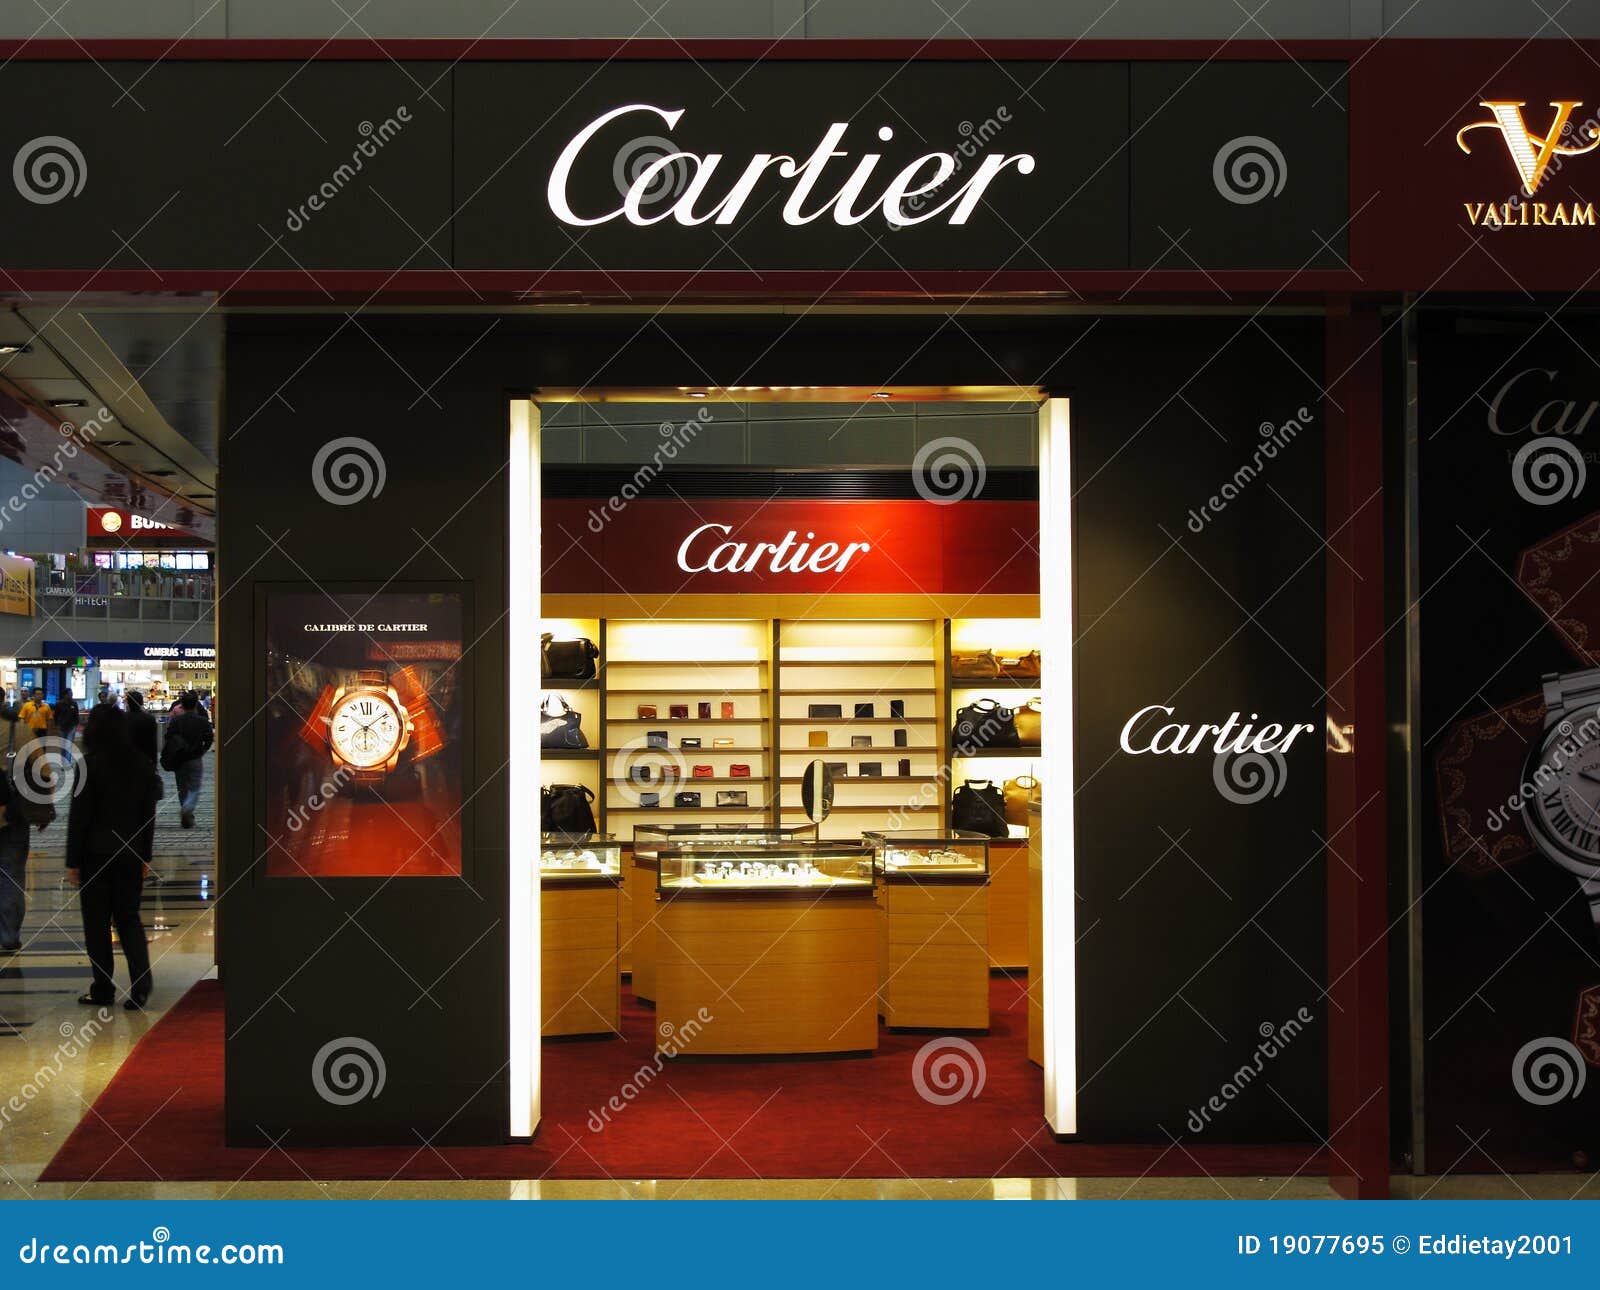 cartier brand